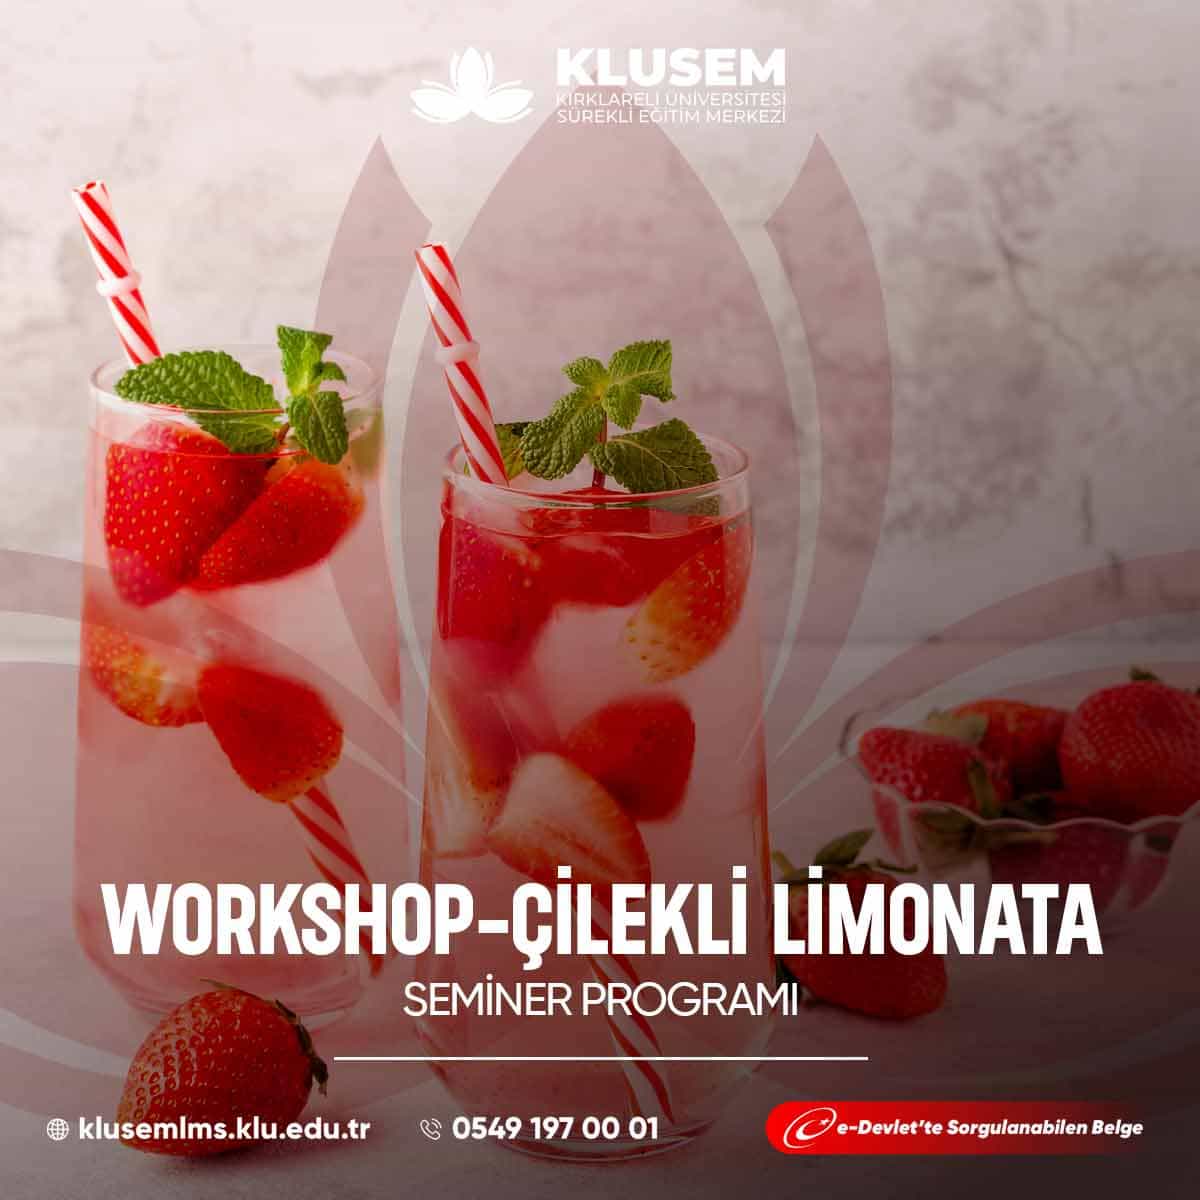 Workshop - Çilekli Limonata Semineri